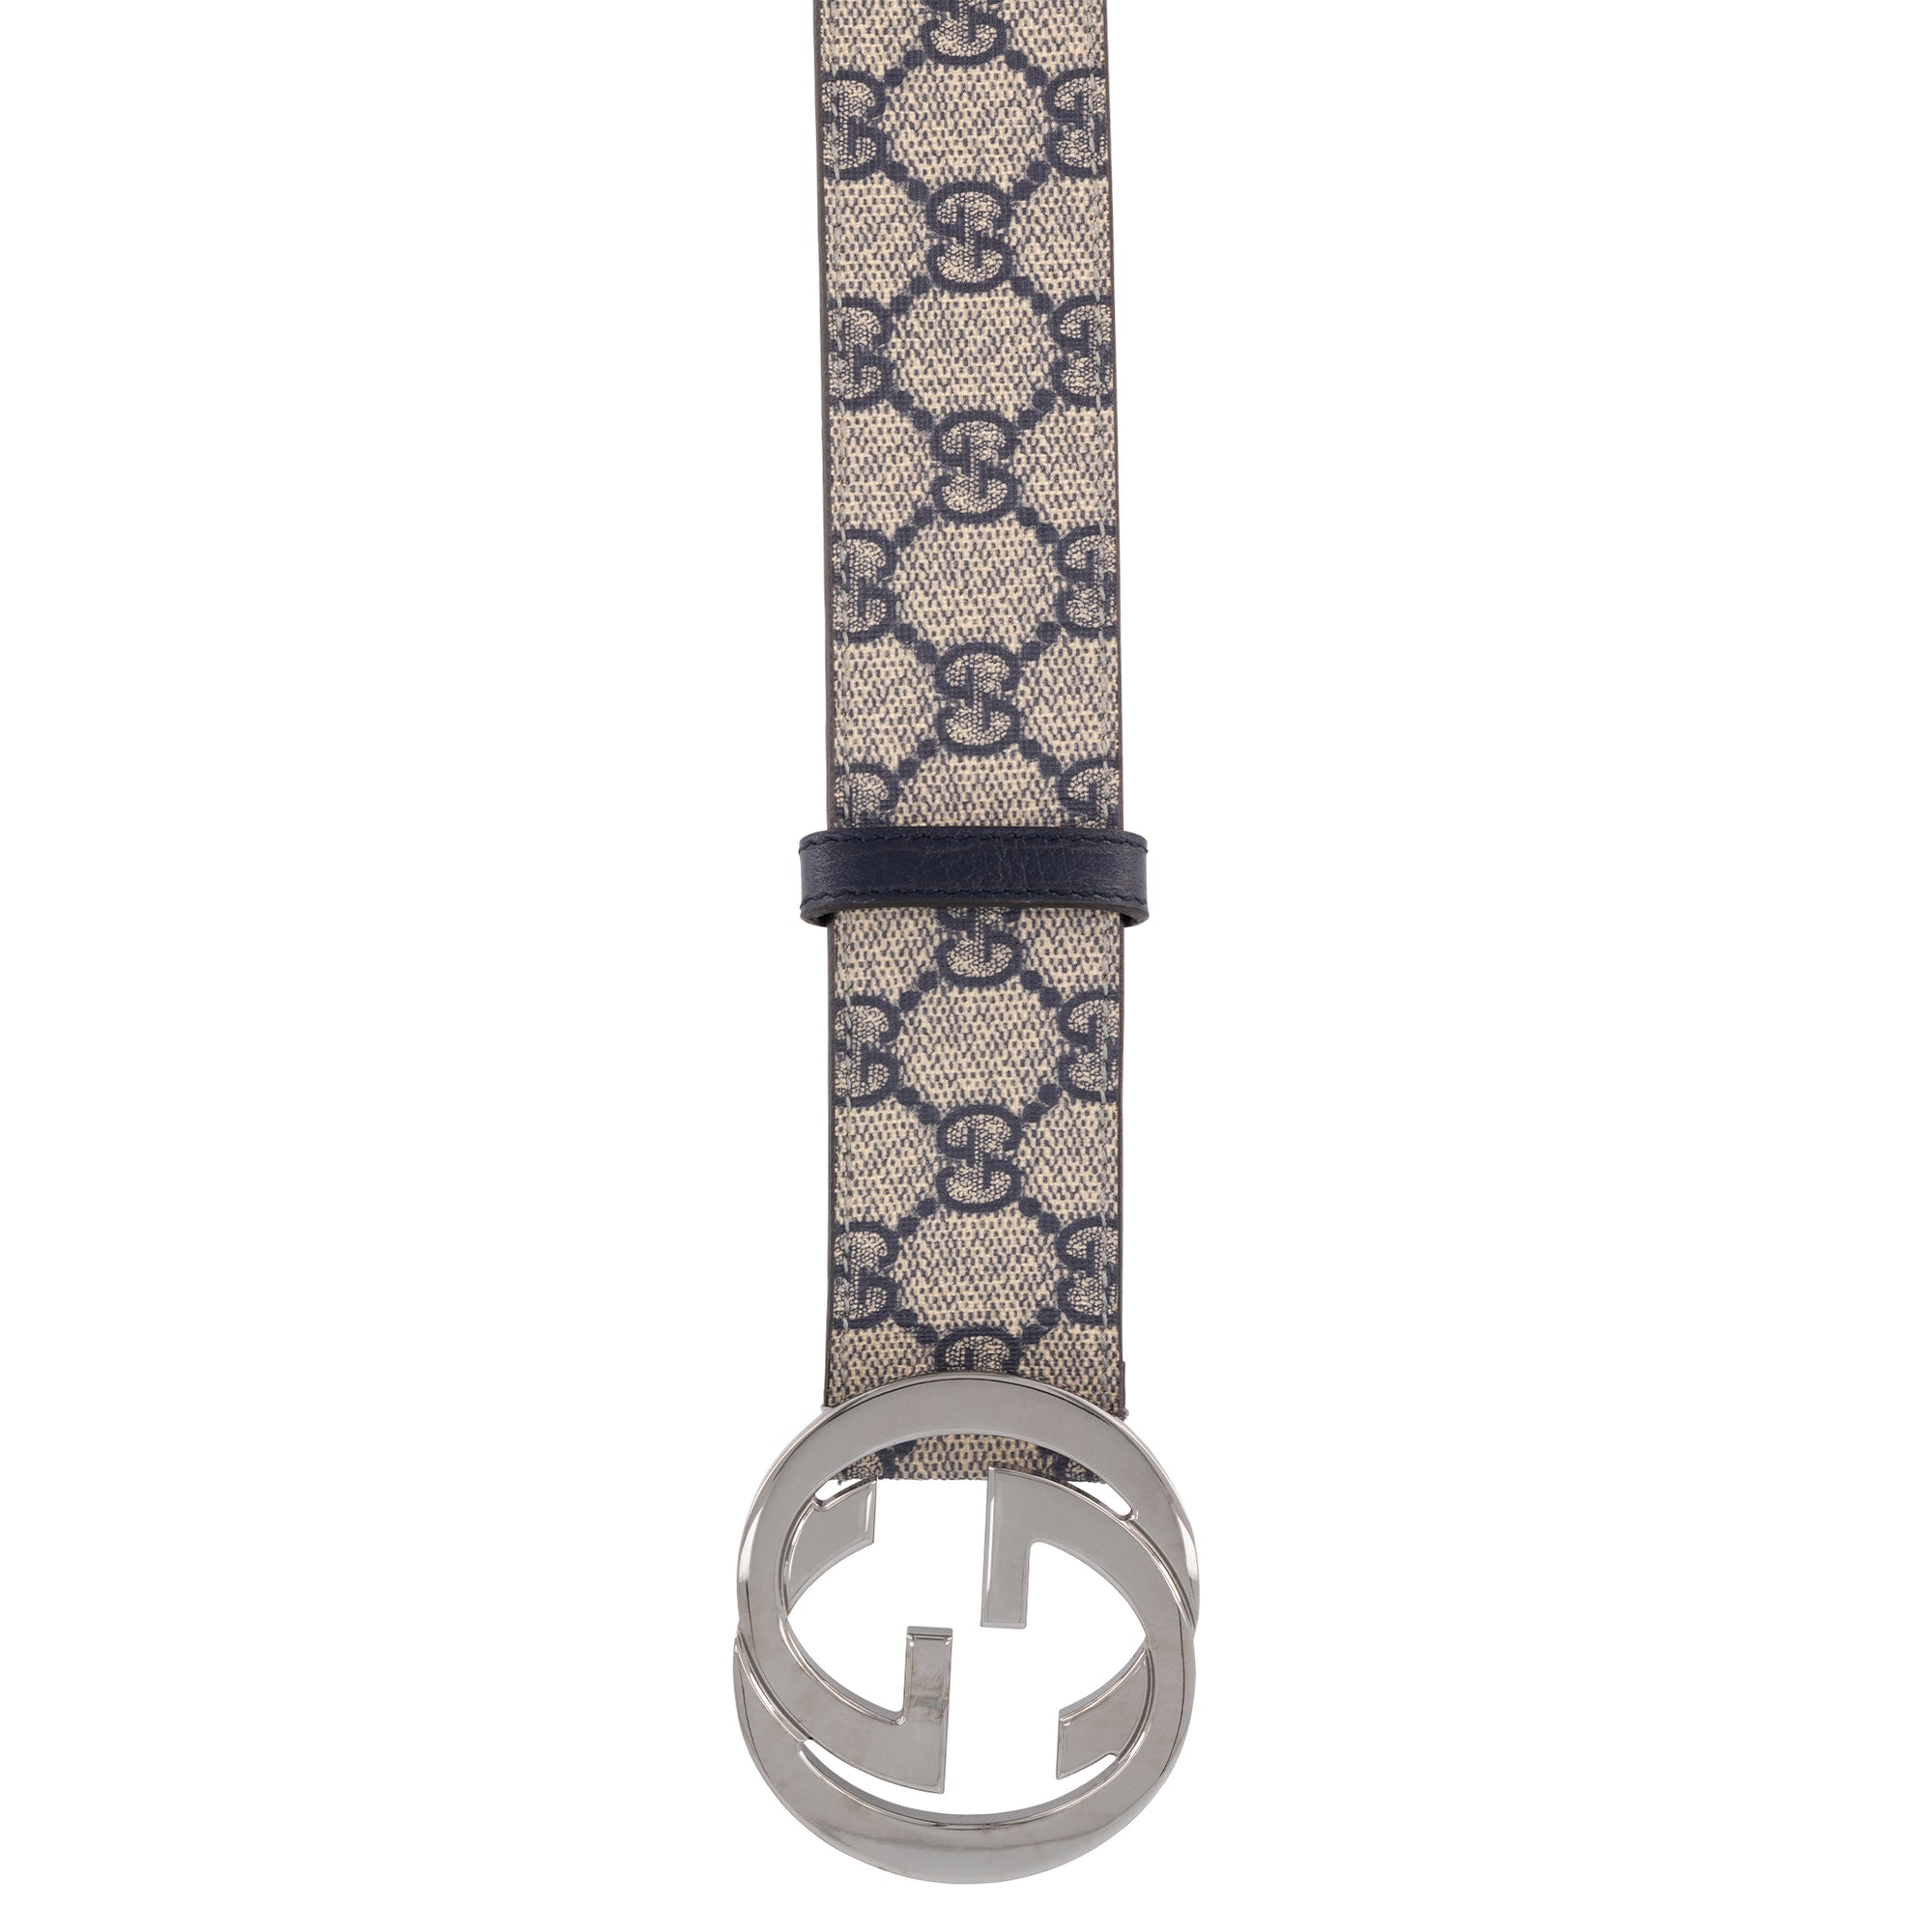 Gucci Monogramm print belt.